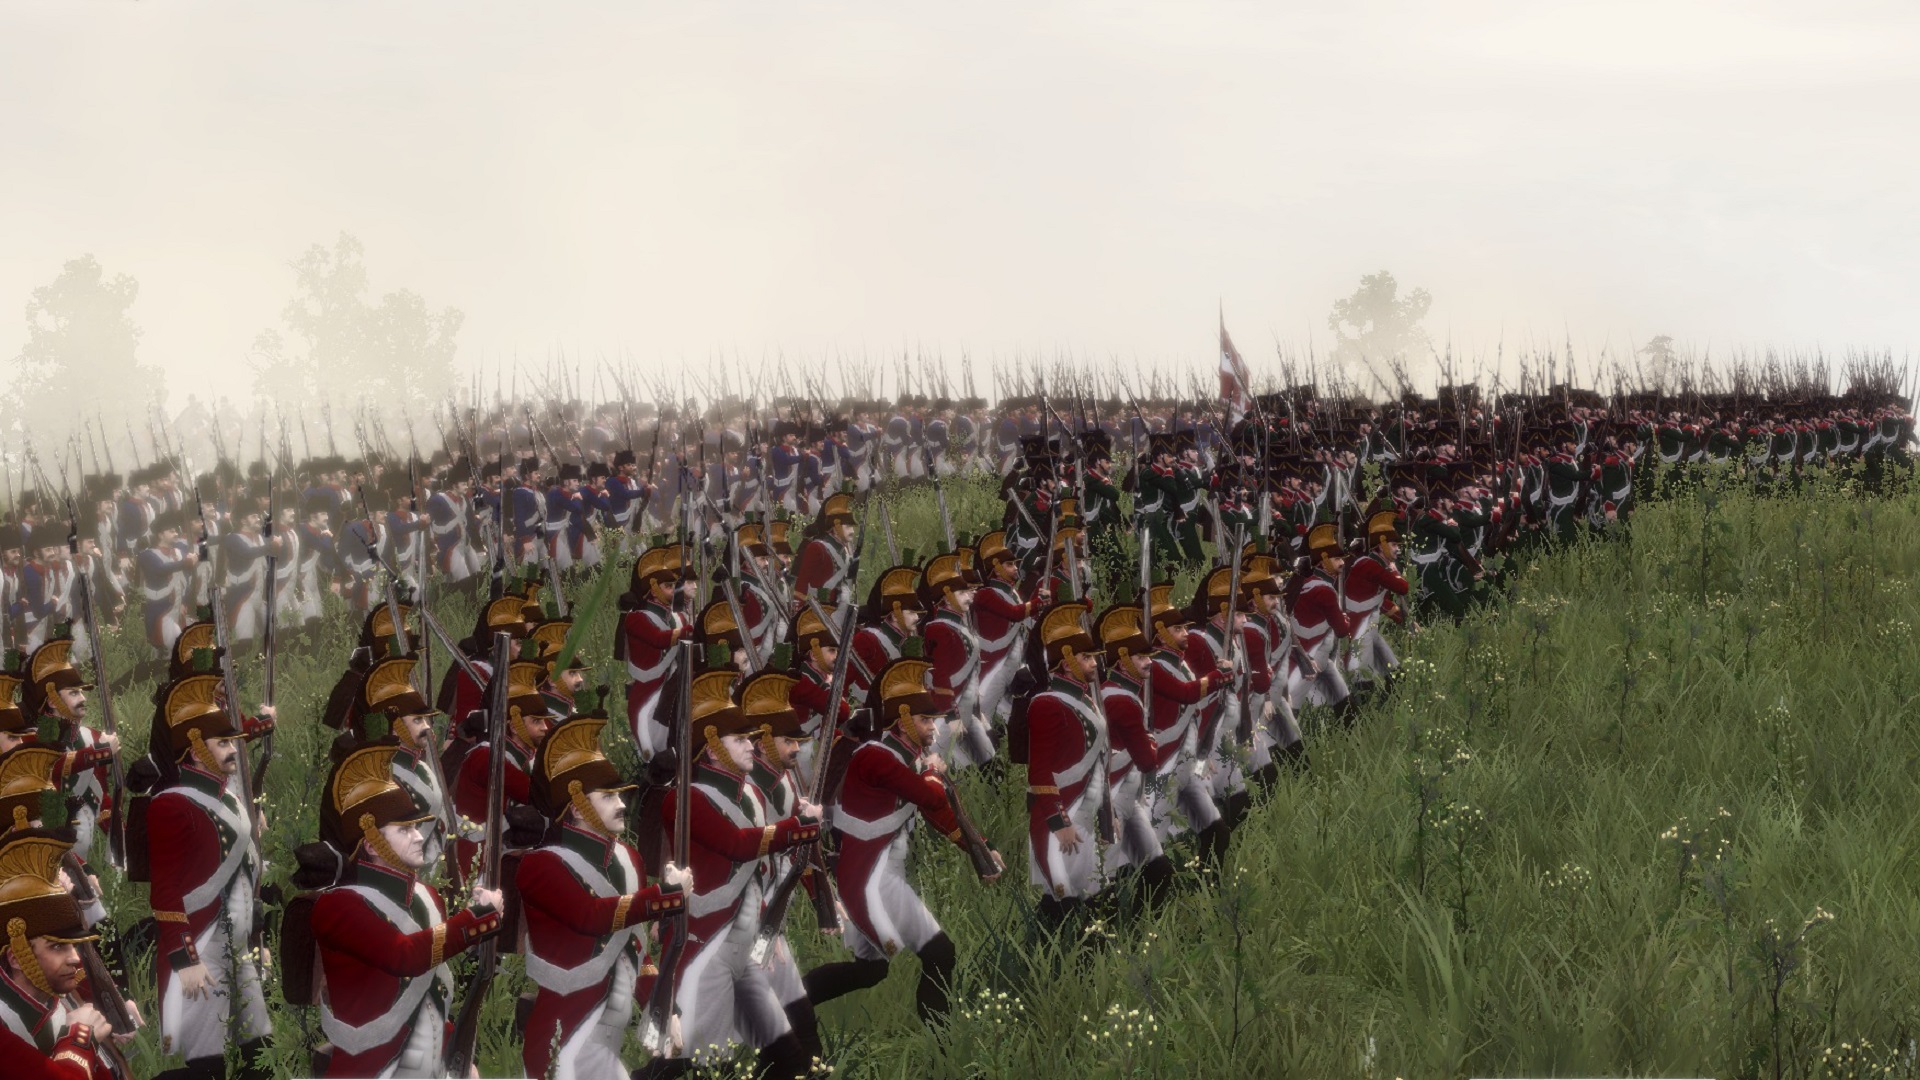 En iyi Napolyon: Total War modları